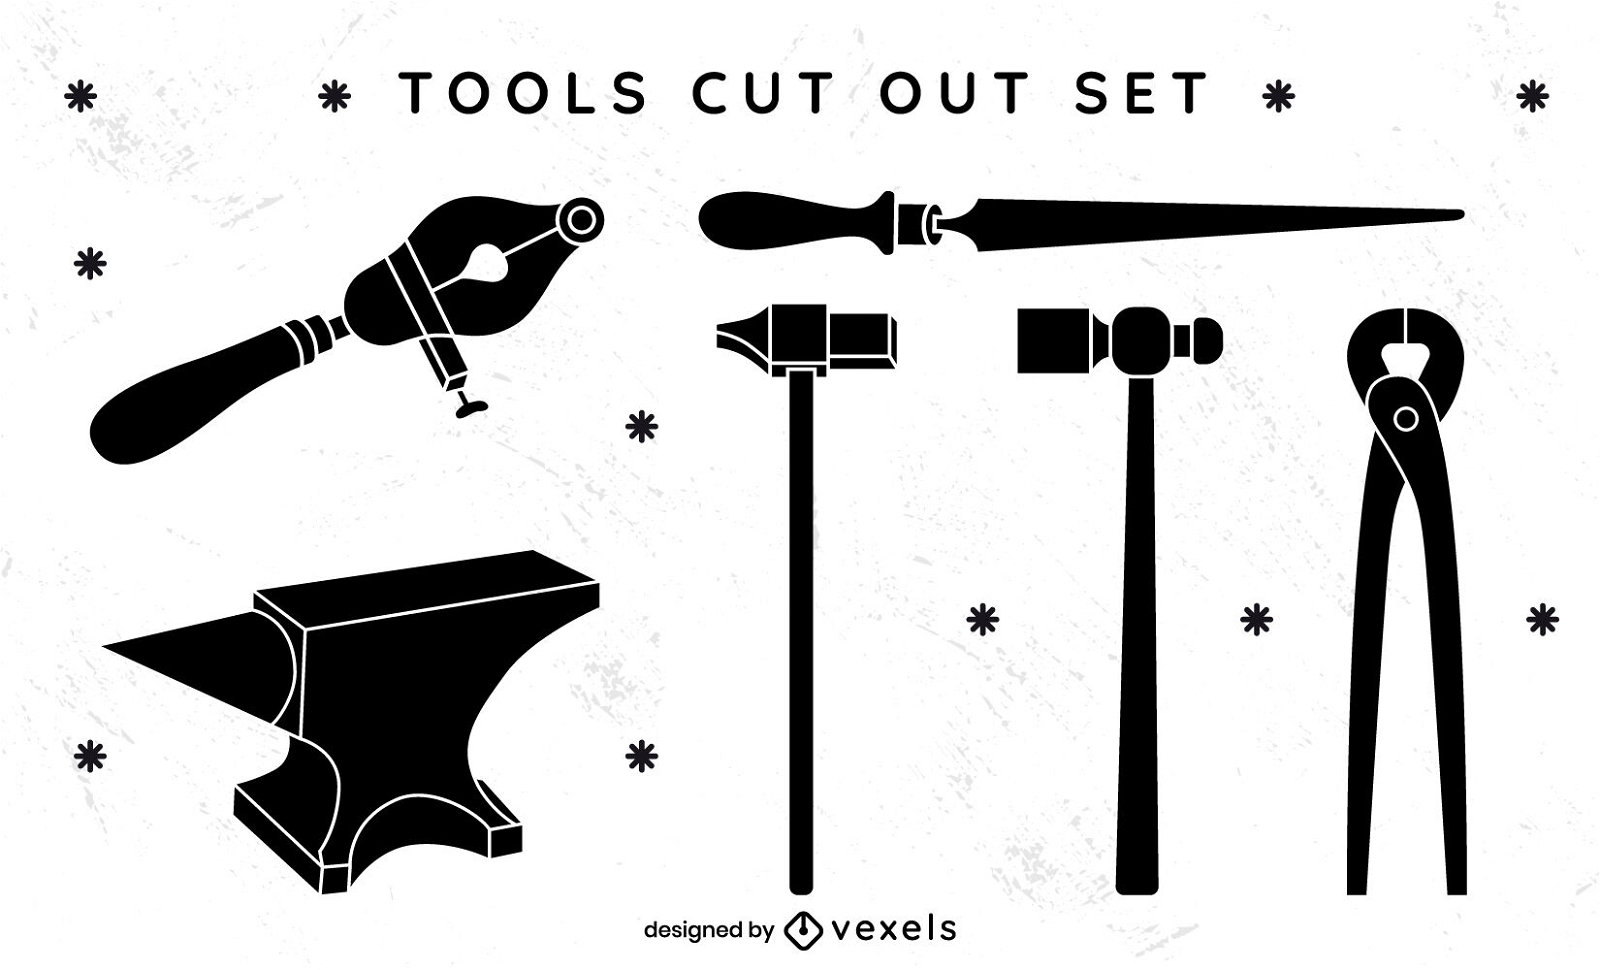 Blacksmith tools cut out set